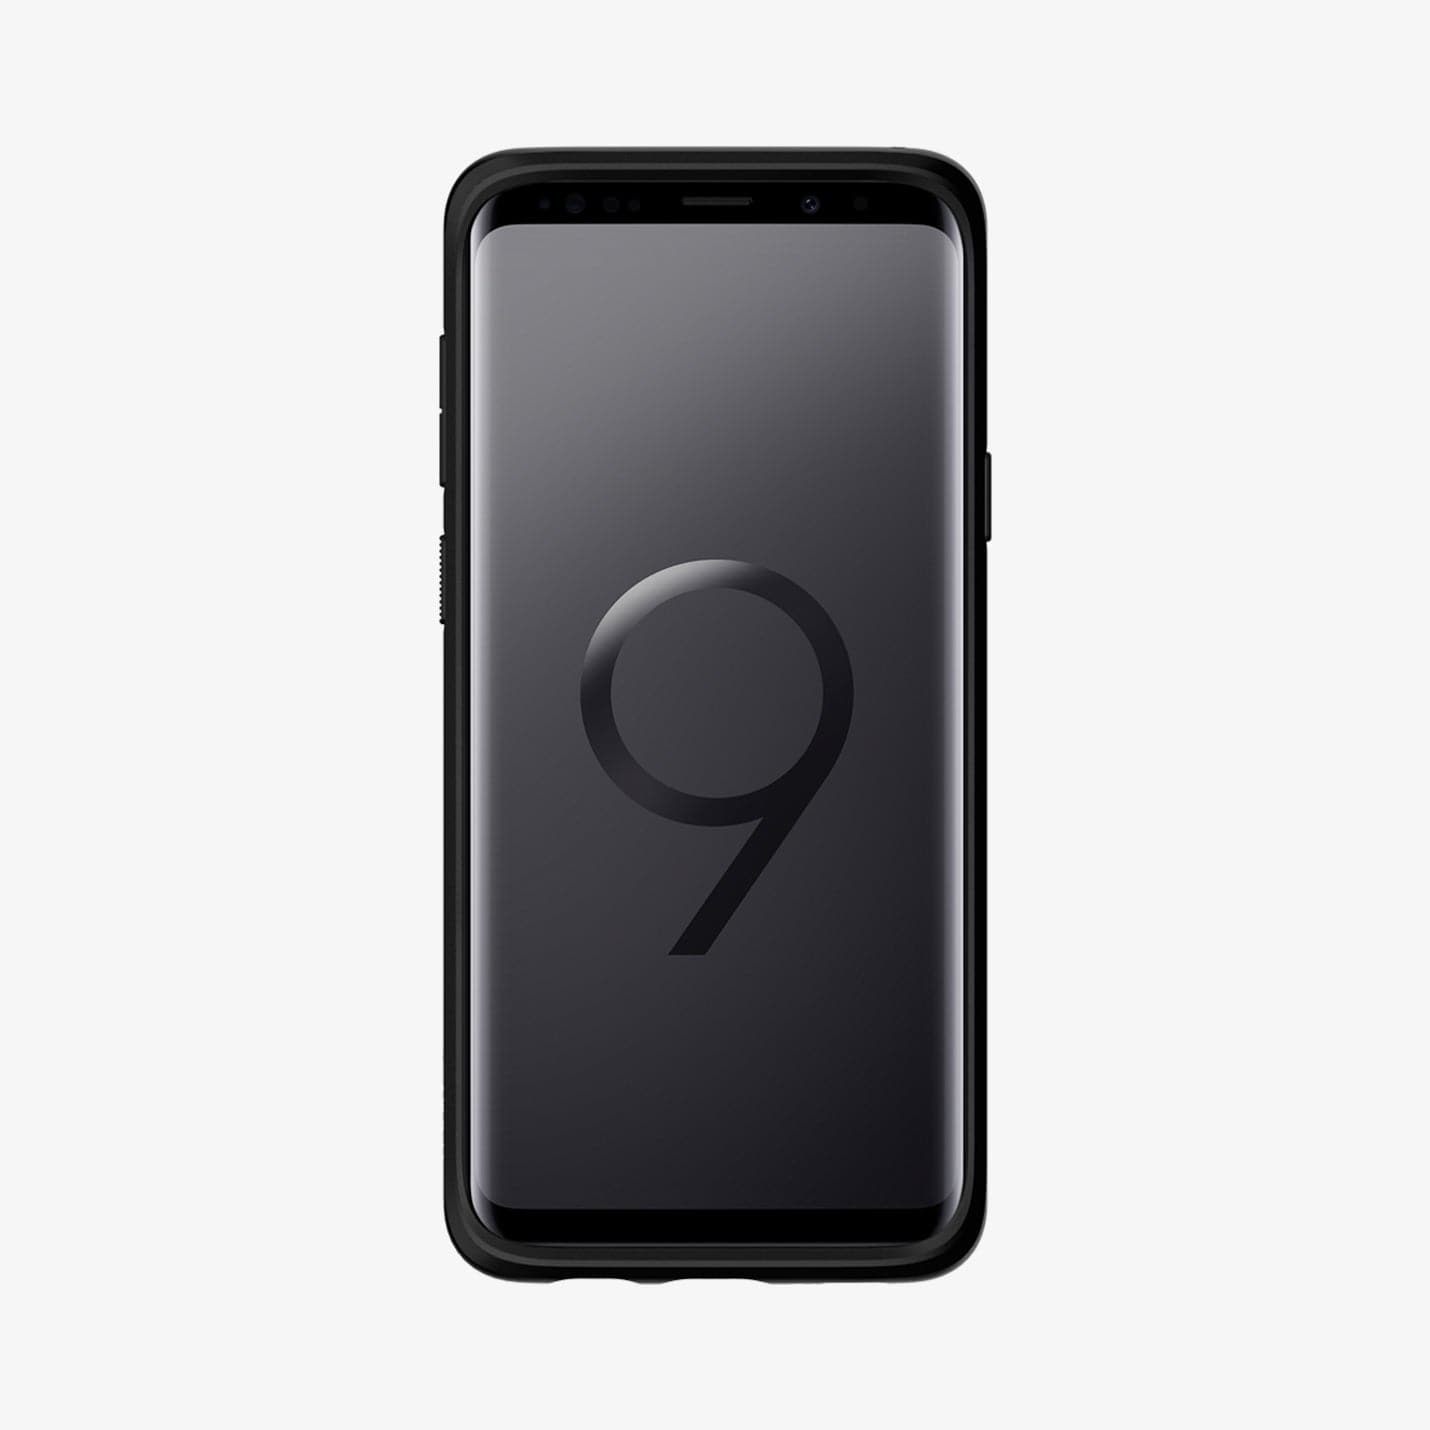 593CS22920 - Galaxy S9 Plus Liquid Air Case in matte black showing the front